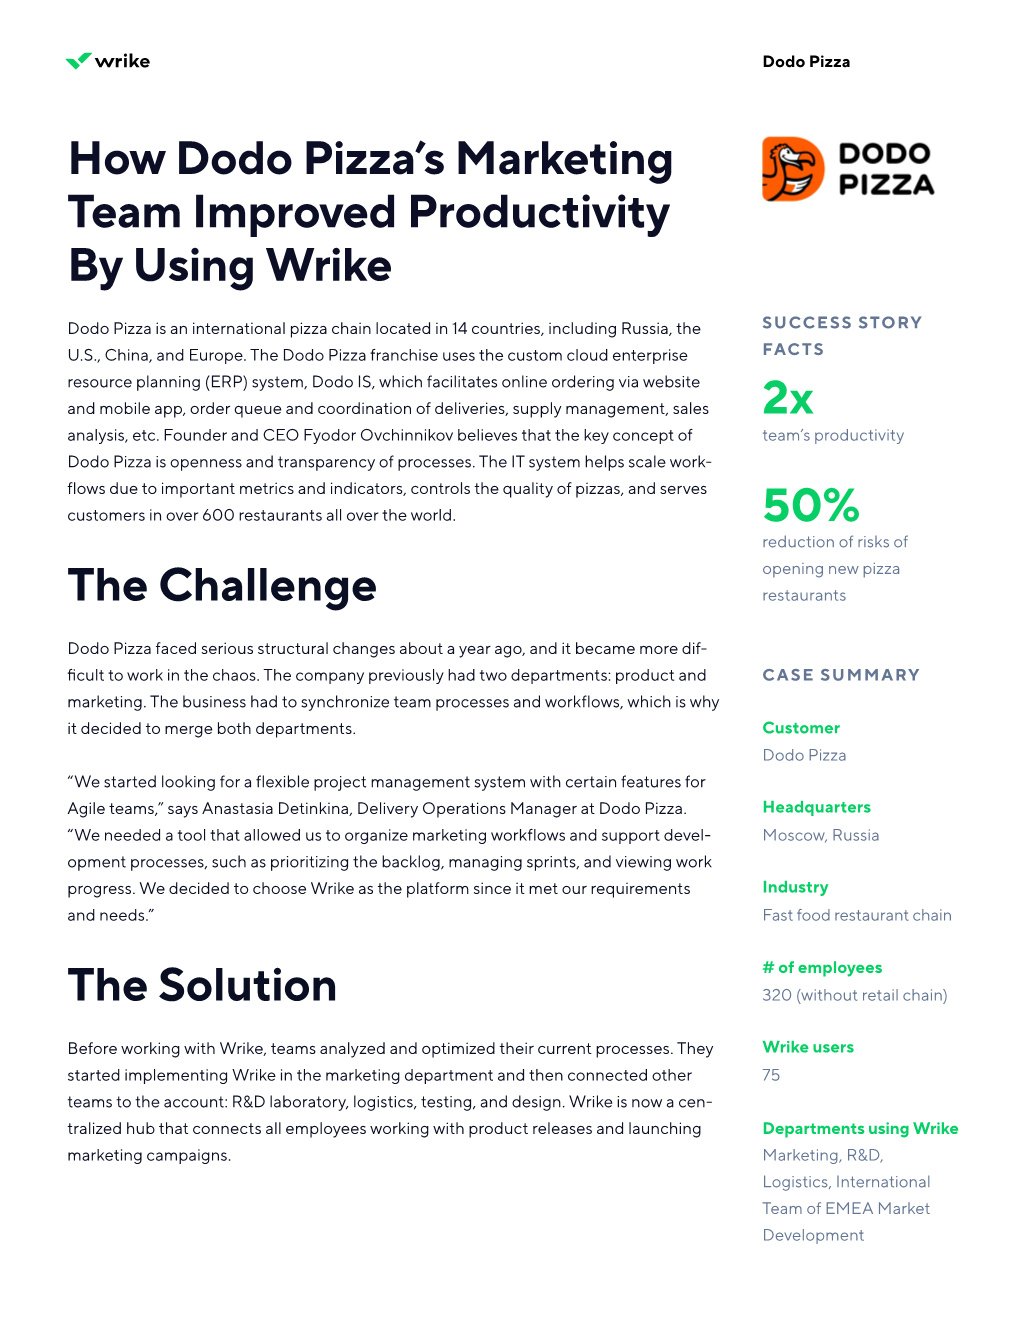 How Dodo Pizza's Marketing Team Improved Productivity by Using